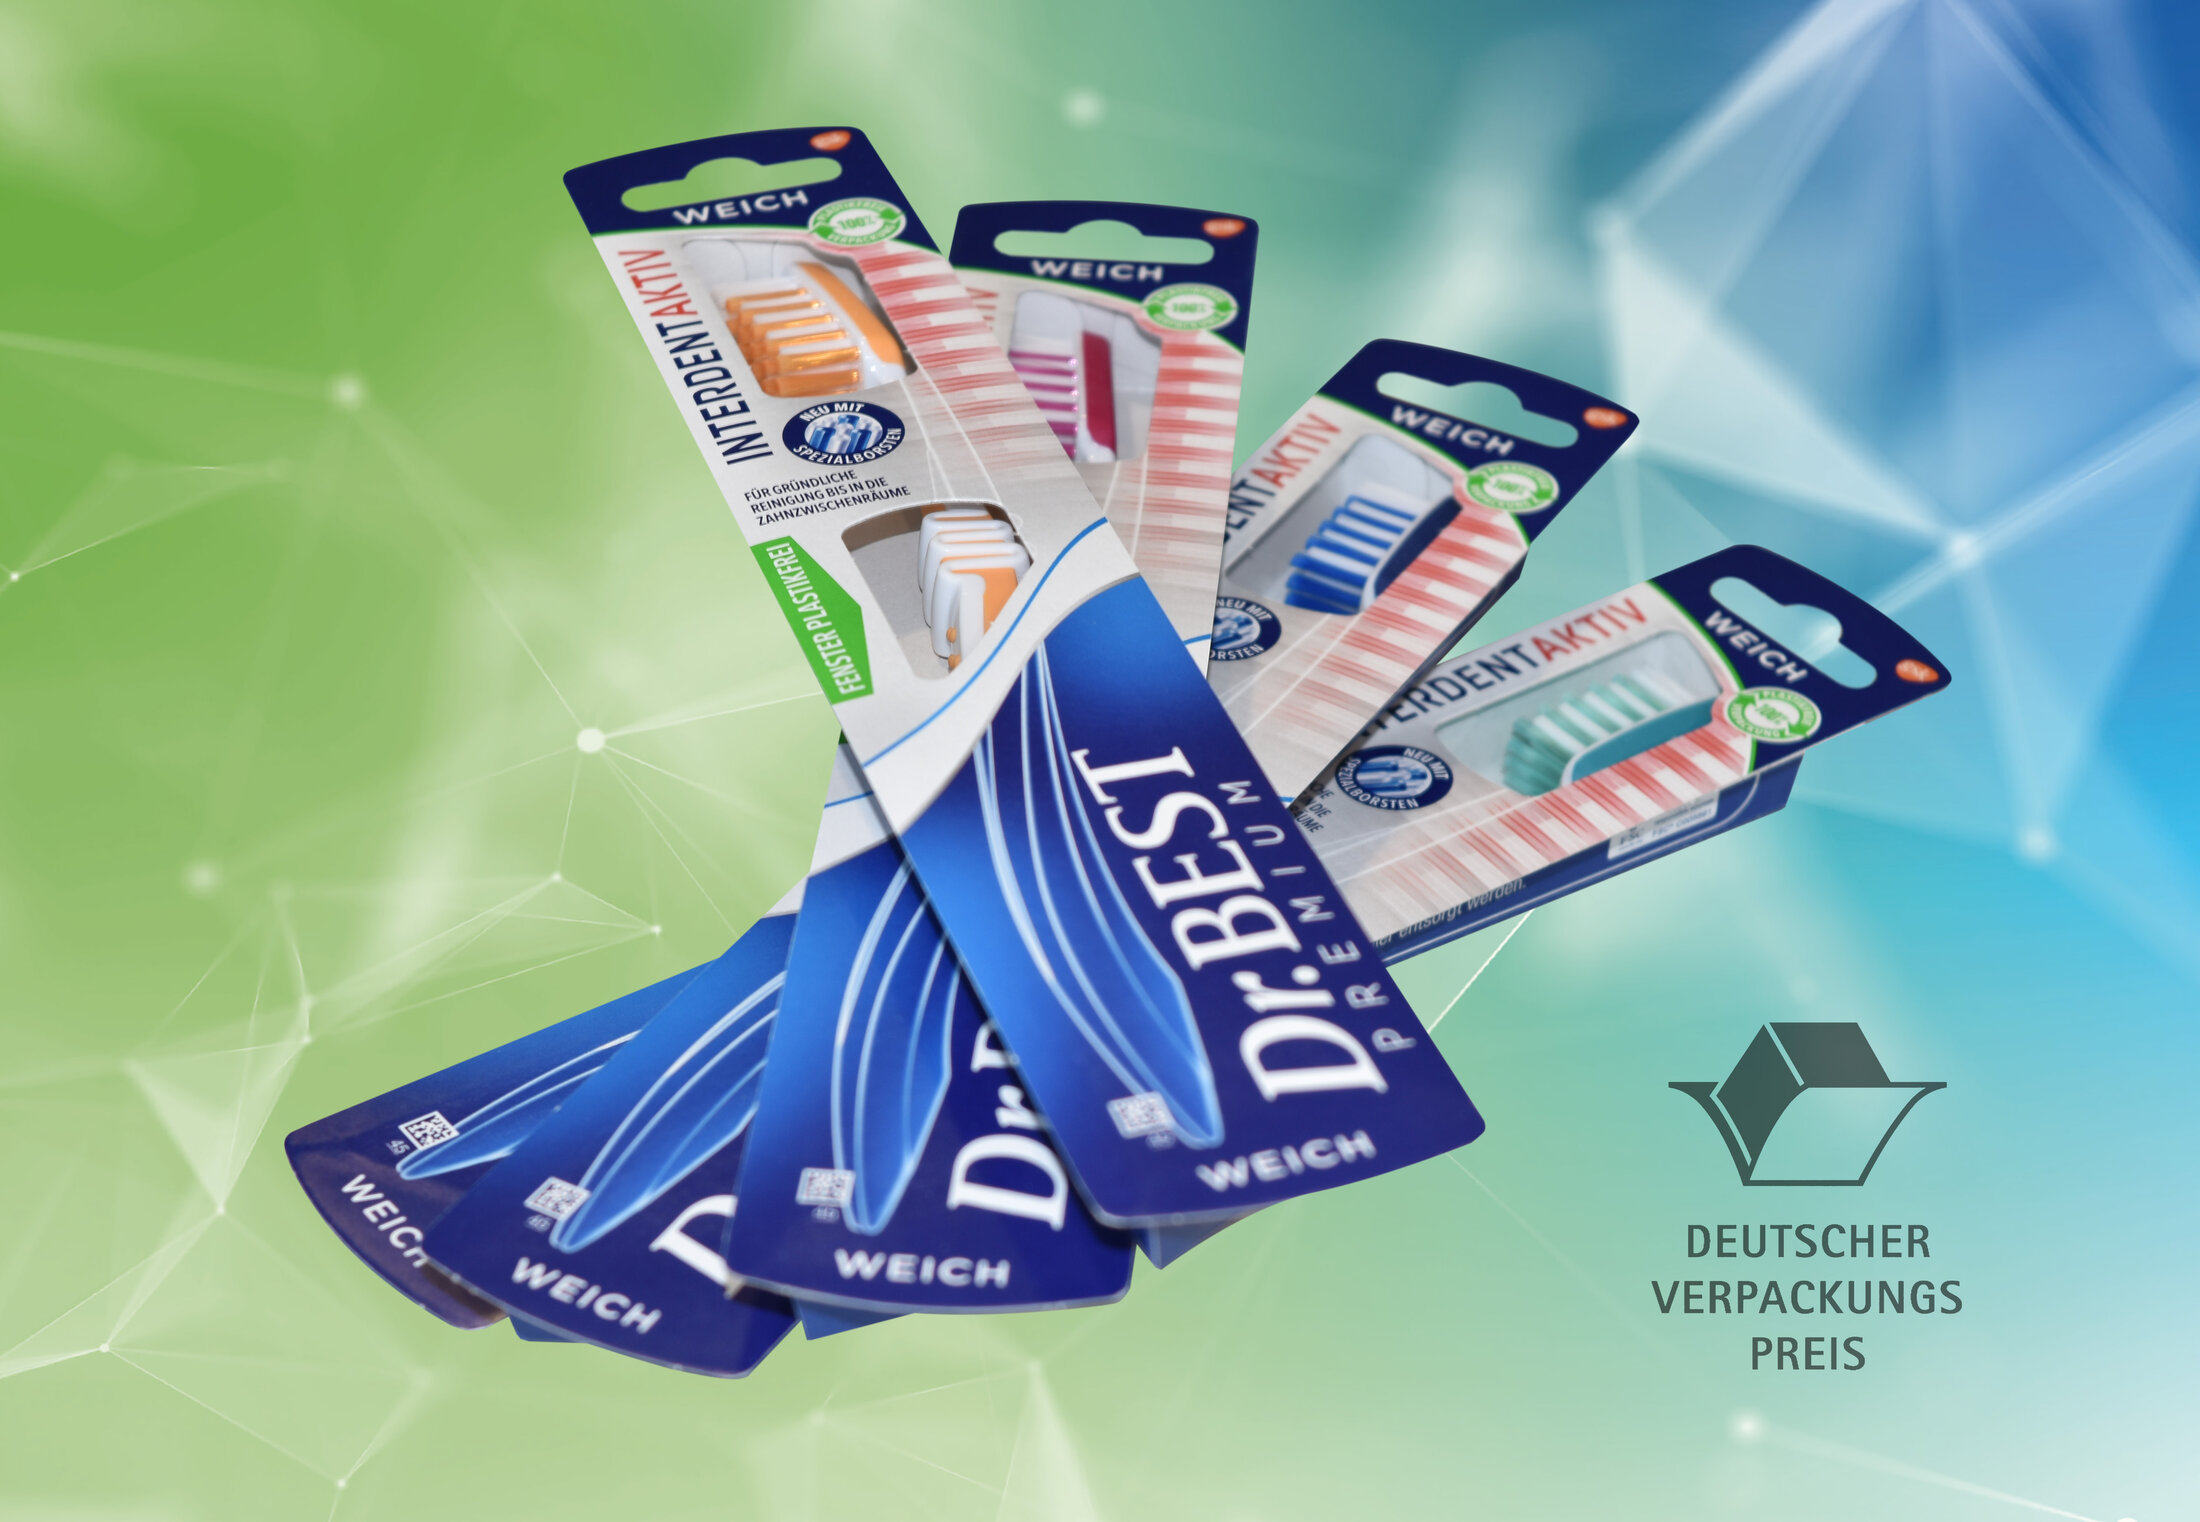 Dr.Best brand plastic-free toothbrush packaging wins packaging awards | © ILLIG Maschinenbau GmbH & Co. KG